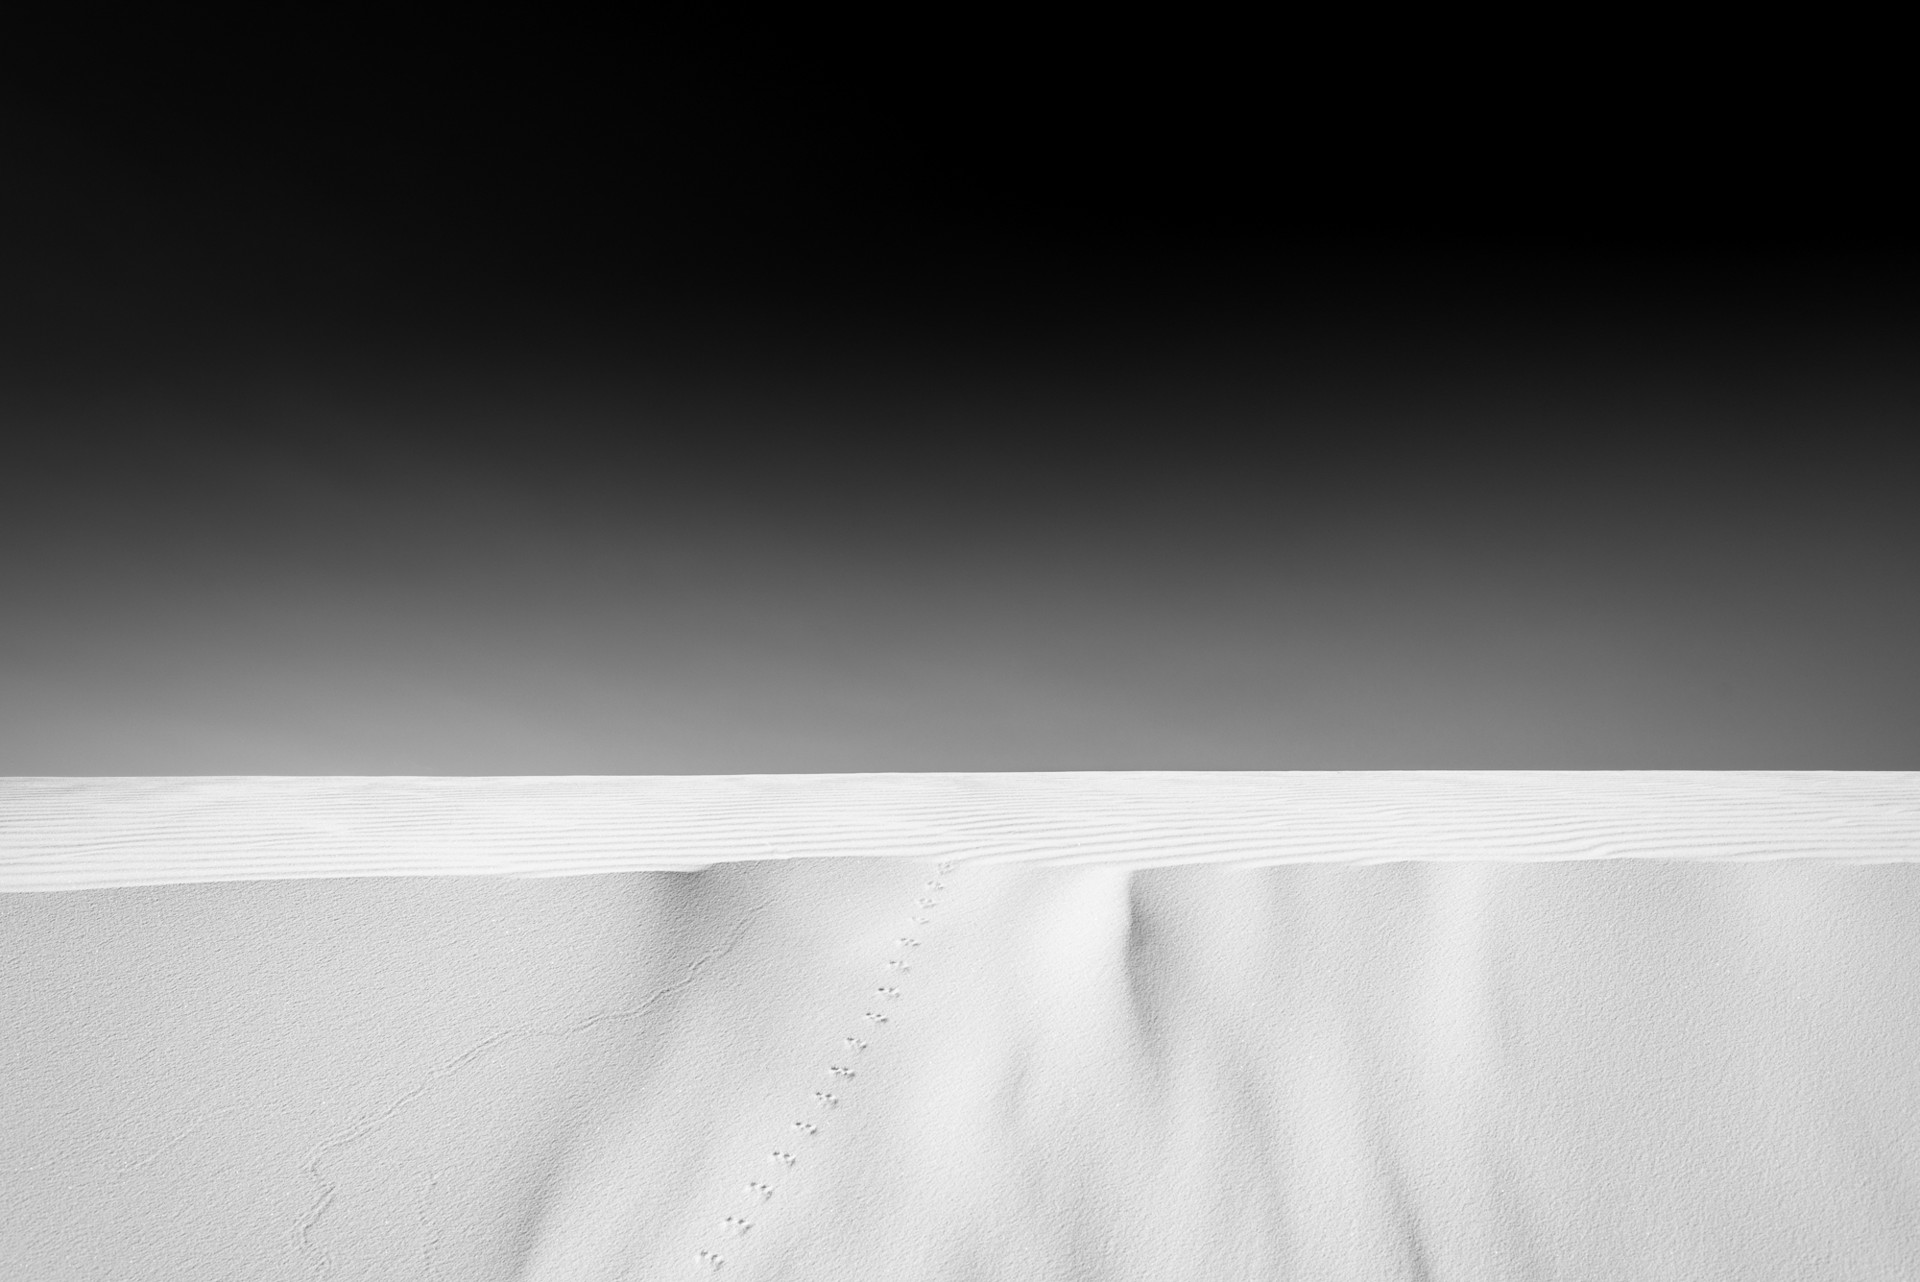 White Sands Tracks #1 by Thom Jackson